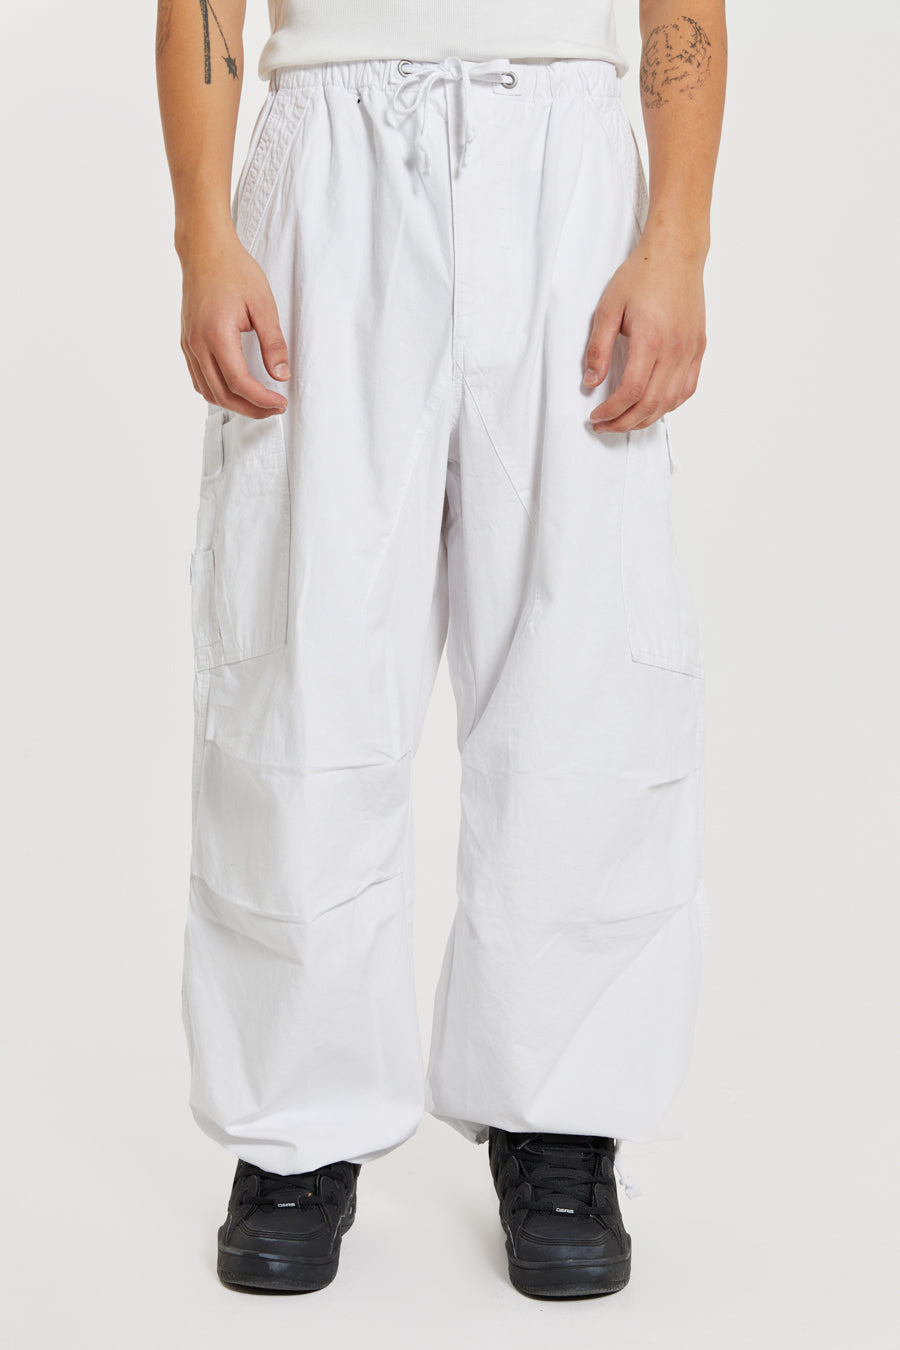 Mens All White Cargo Pants Flash Sales | bellvalefarms.com